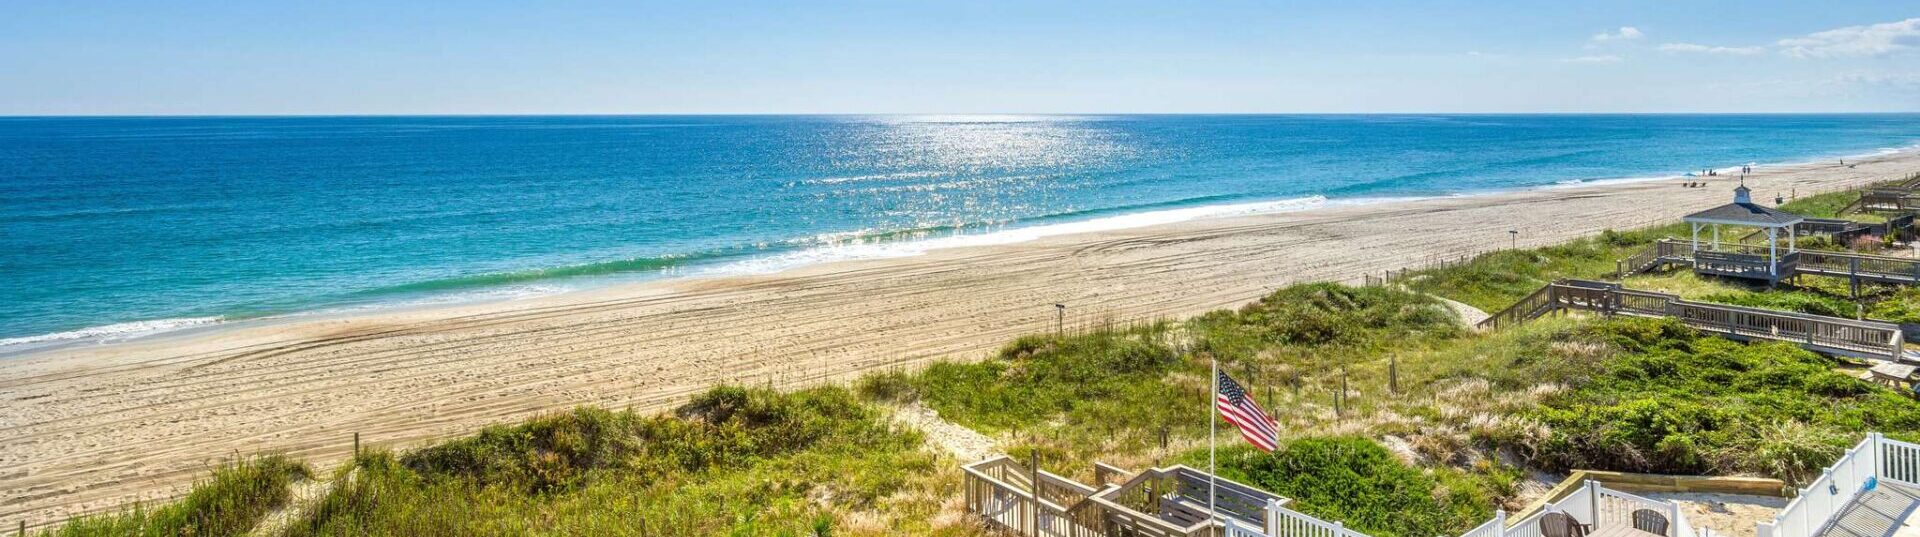 North Carolina Beach Vacation Rentals in Emerald Isle, Atlantic Beach, and more